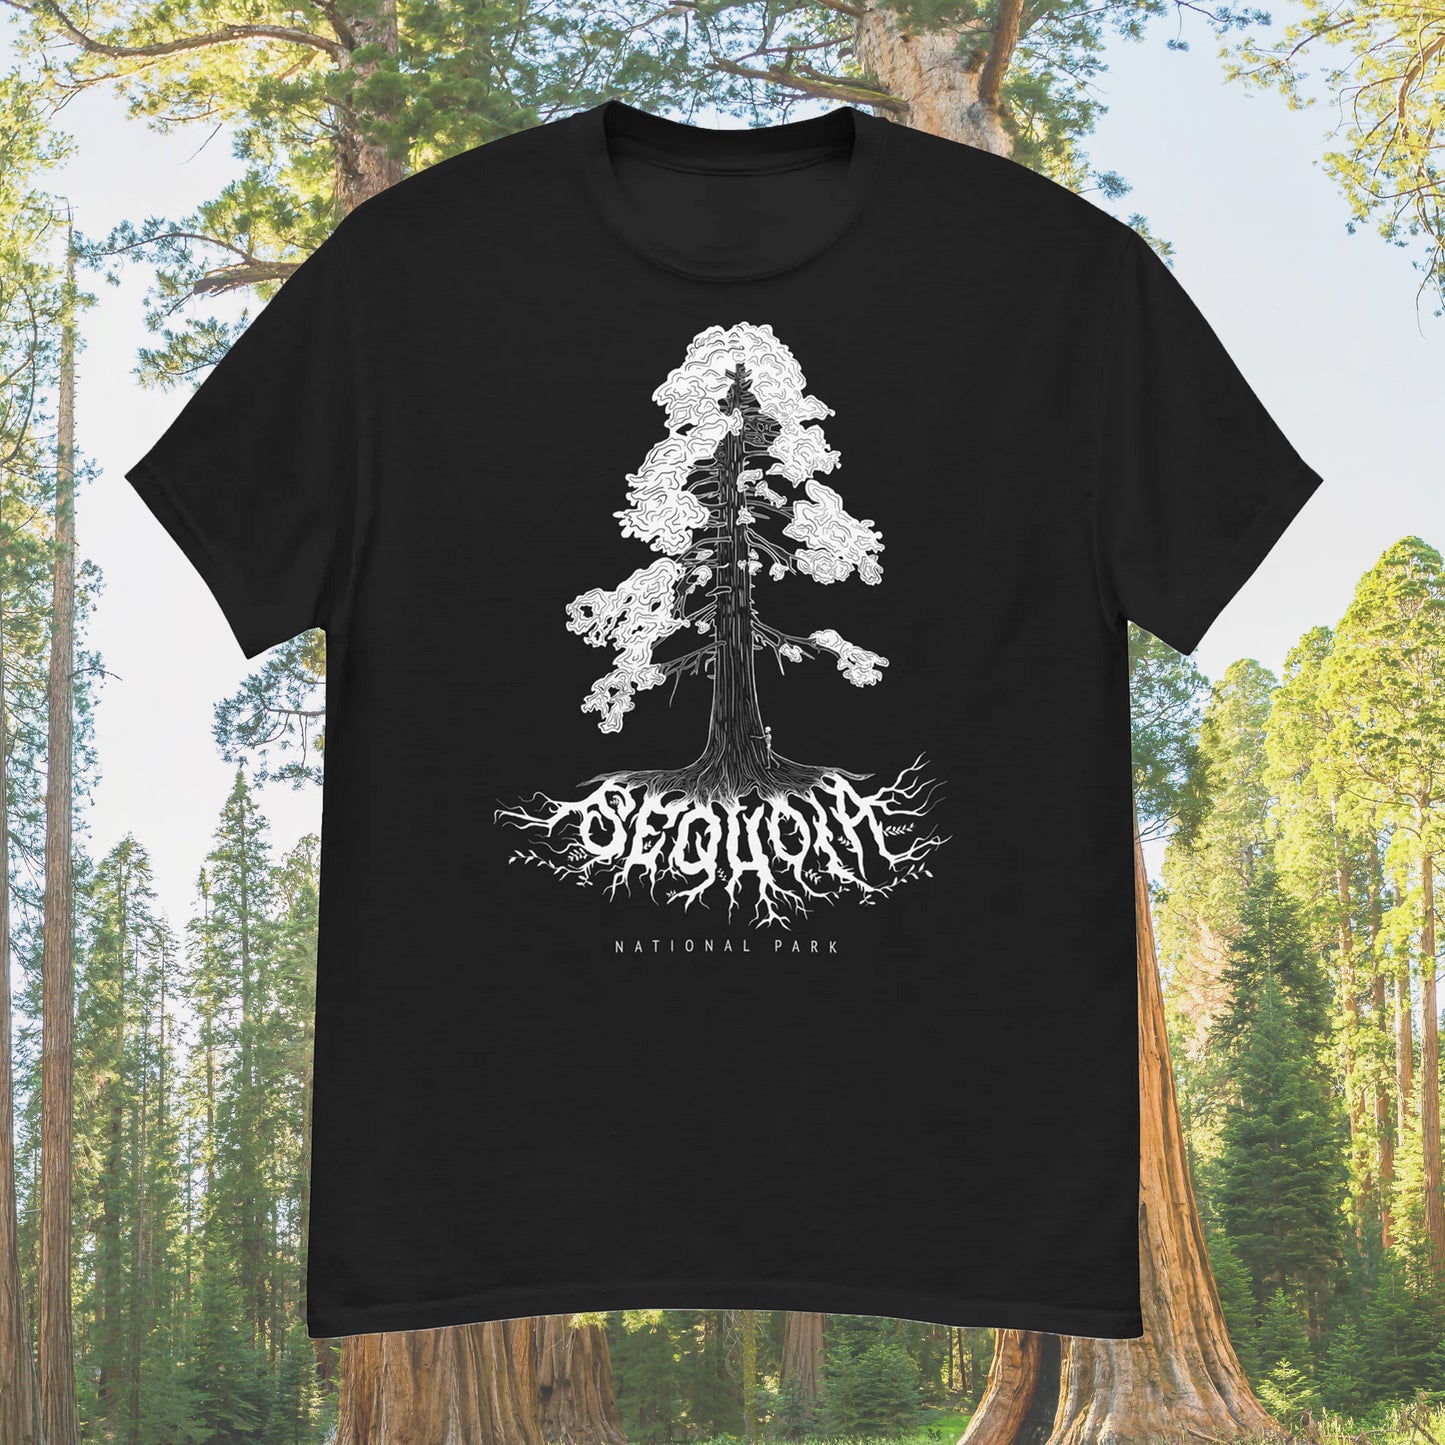 Sequoia National Park Short Sleeve Black Death Metal Tee